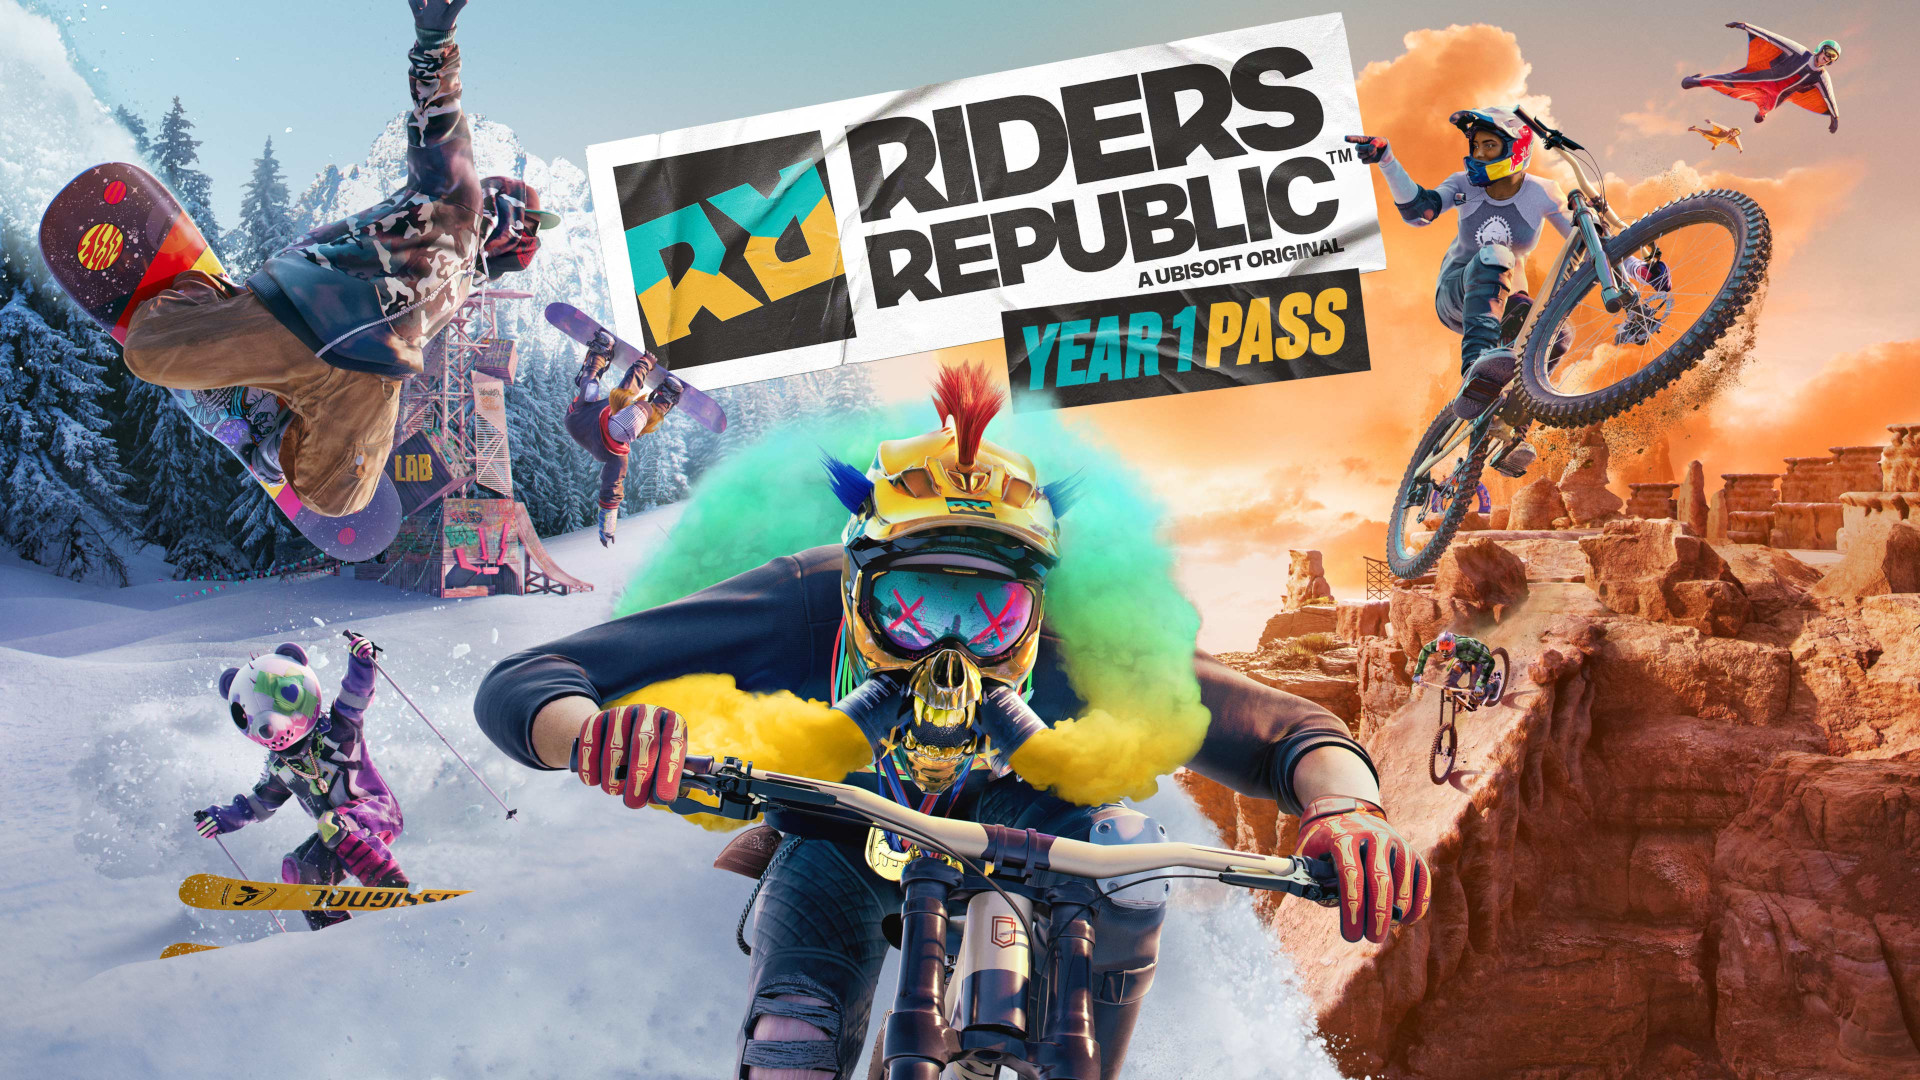 Riders Republic - Year 1 Pass DLC EU PS4 CD Key 11.29 USD